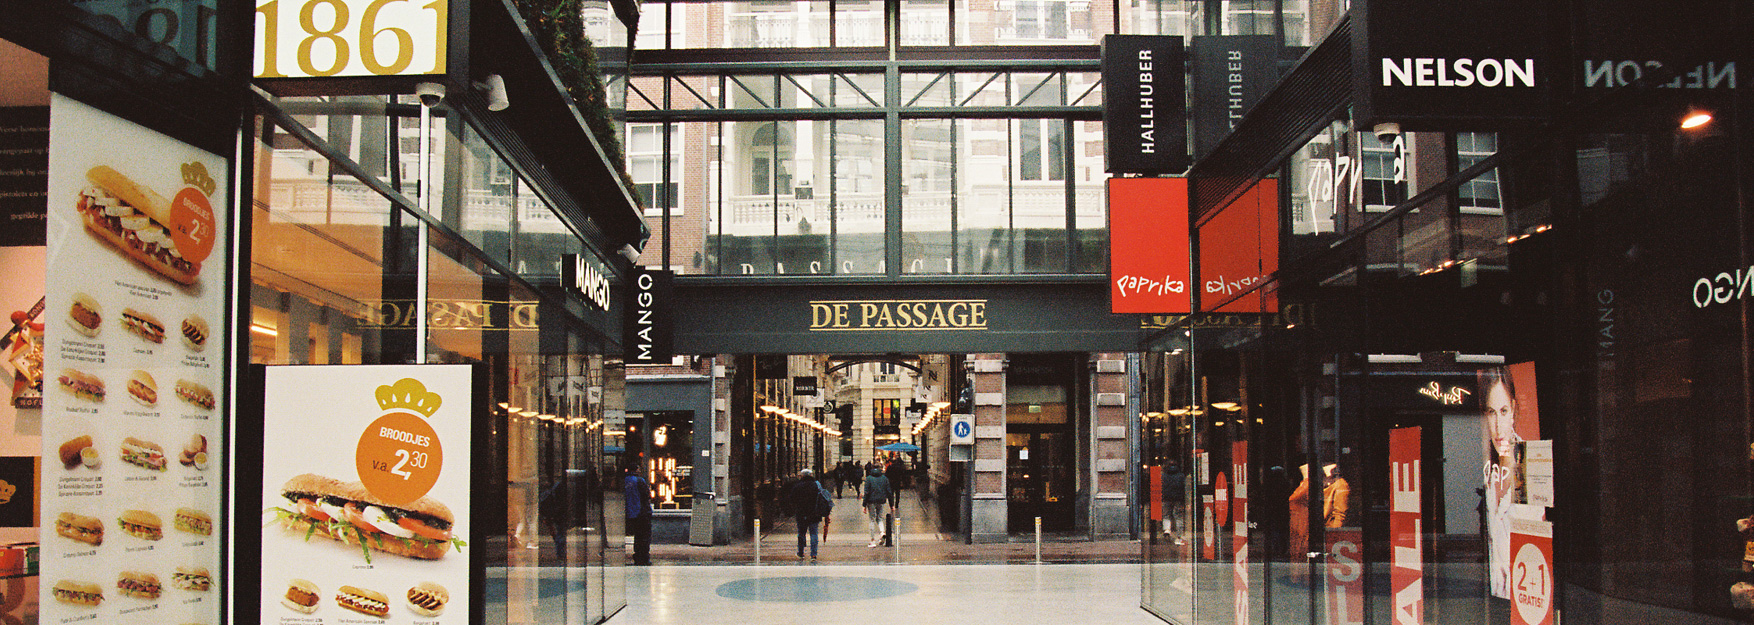 Nieuwe-passage